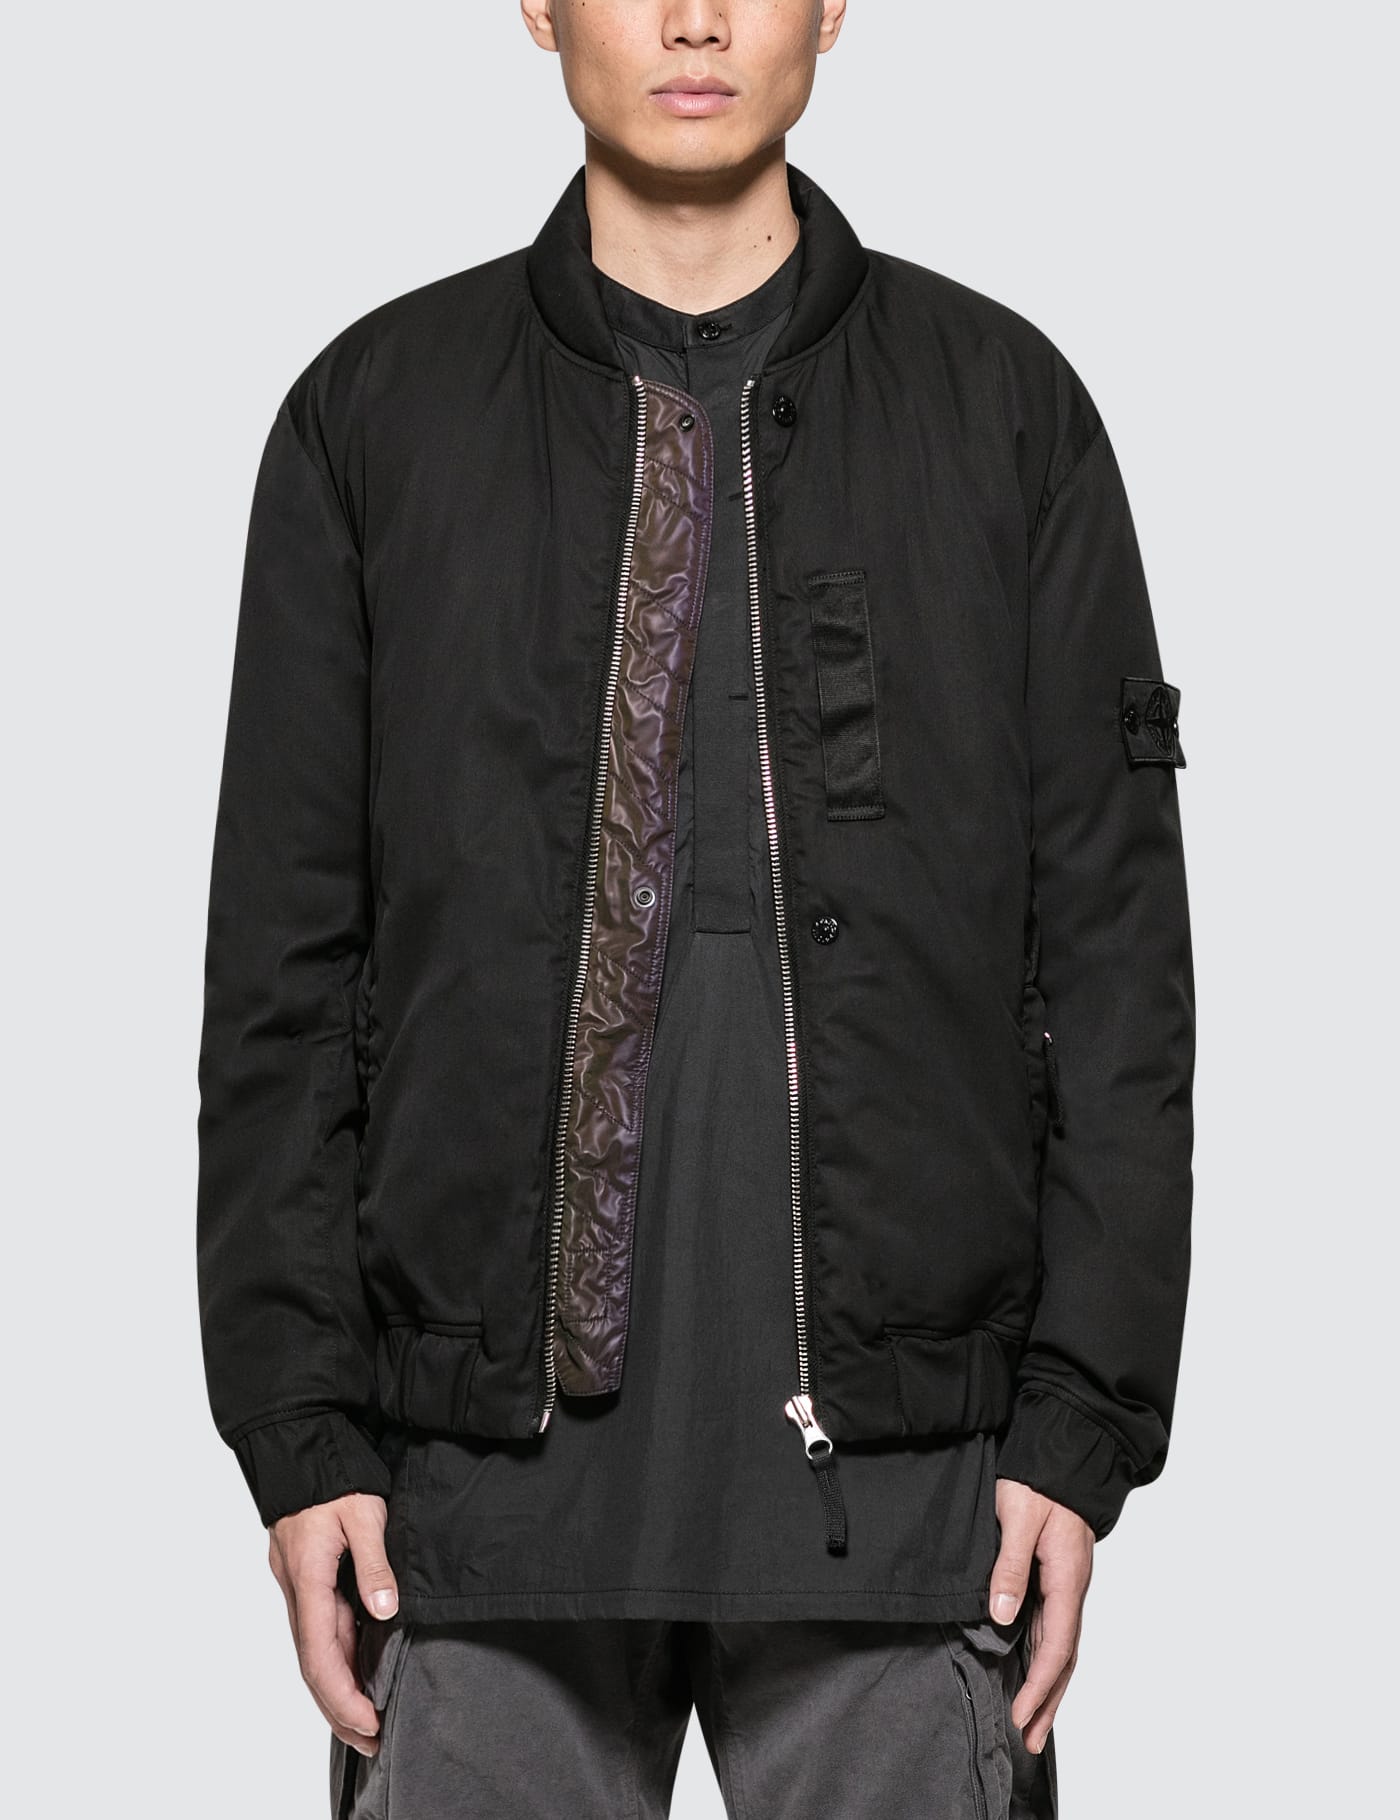 STONE ISLAND SHADOW PROJECT フリースジャケット袖丈710cm